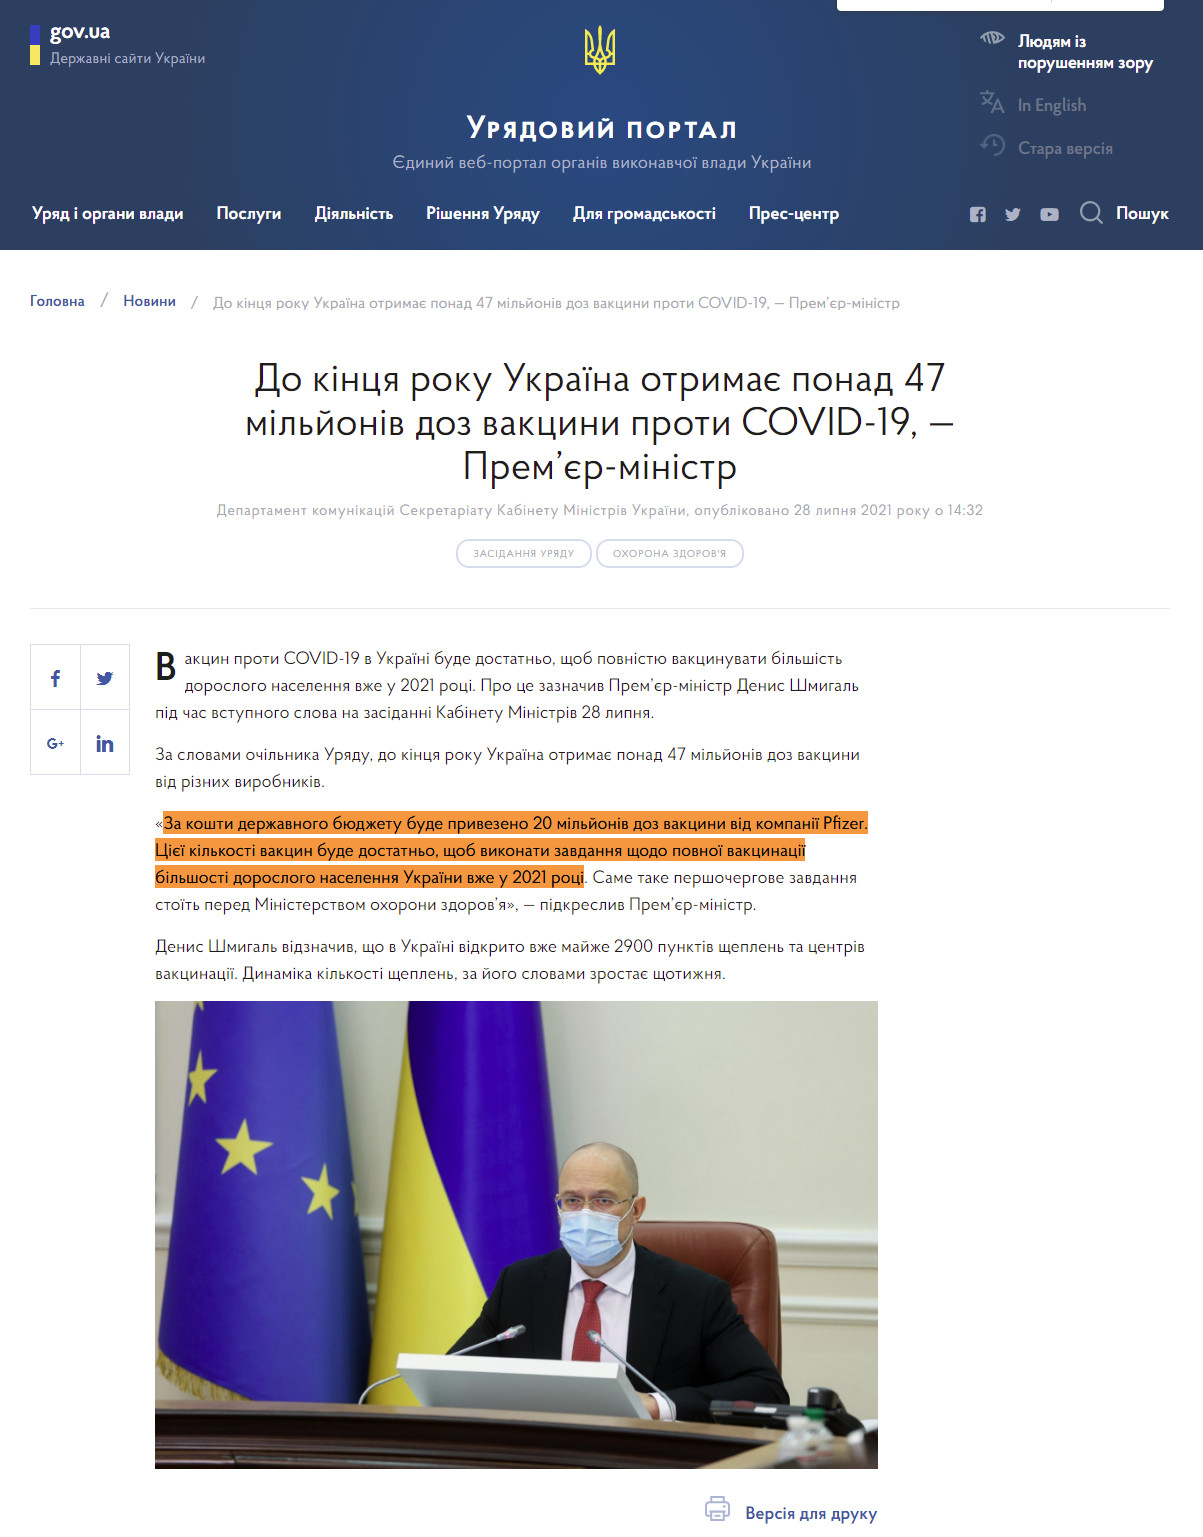 https://www.kmu.gov.ua/news/do-kincya-roku-ukrayina-otrimaye-ponad-47-miljoniv-doz-vakcini-proti-covid-19-premyer-ministr